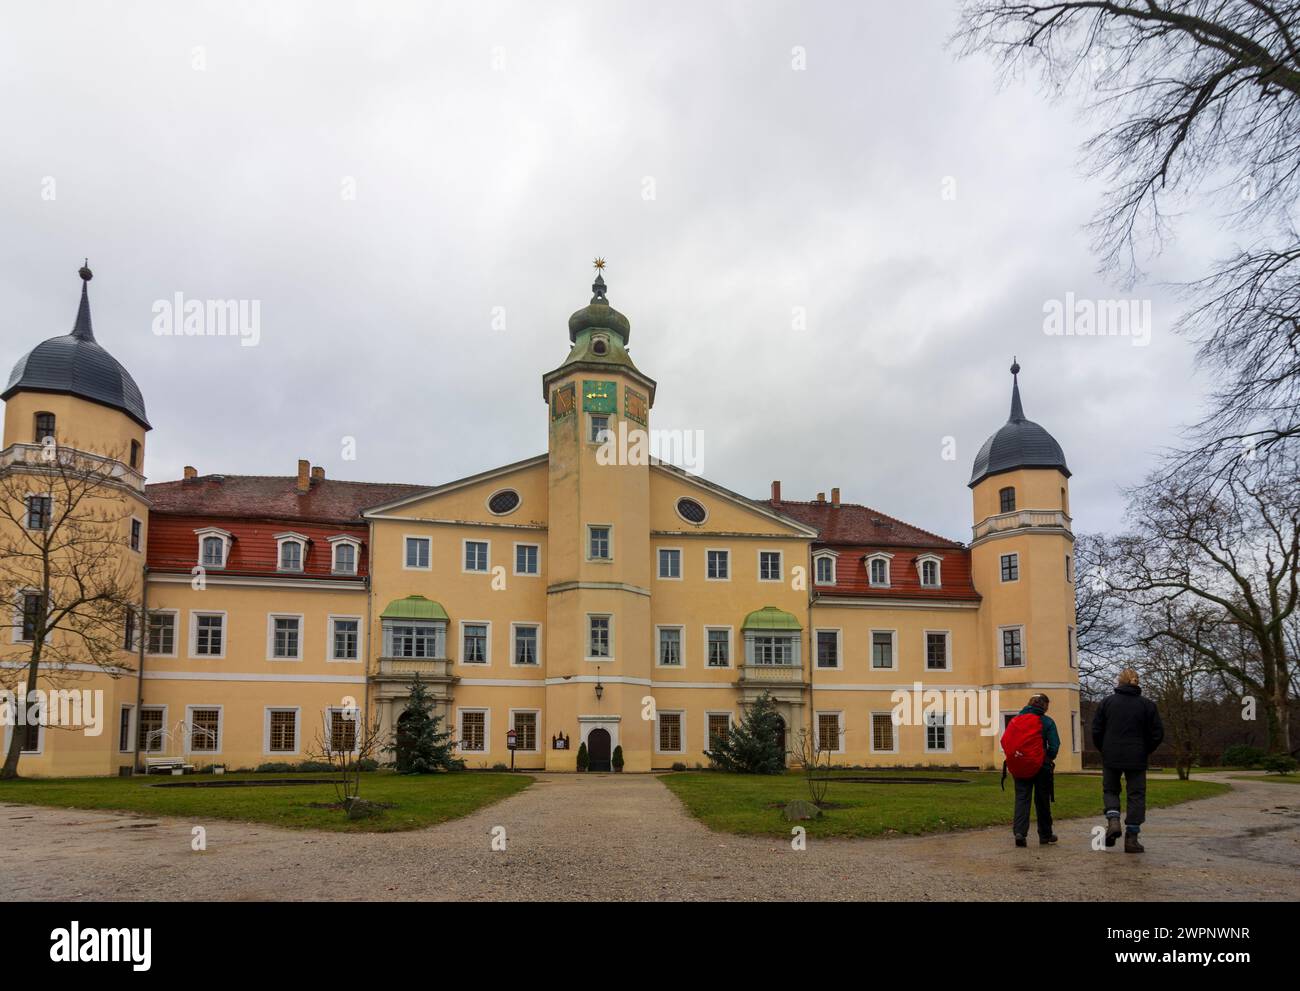 Ottendorf-Okrilla, Schloss Hermsdorf Castle, Saxony, Germany Stock Photo